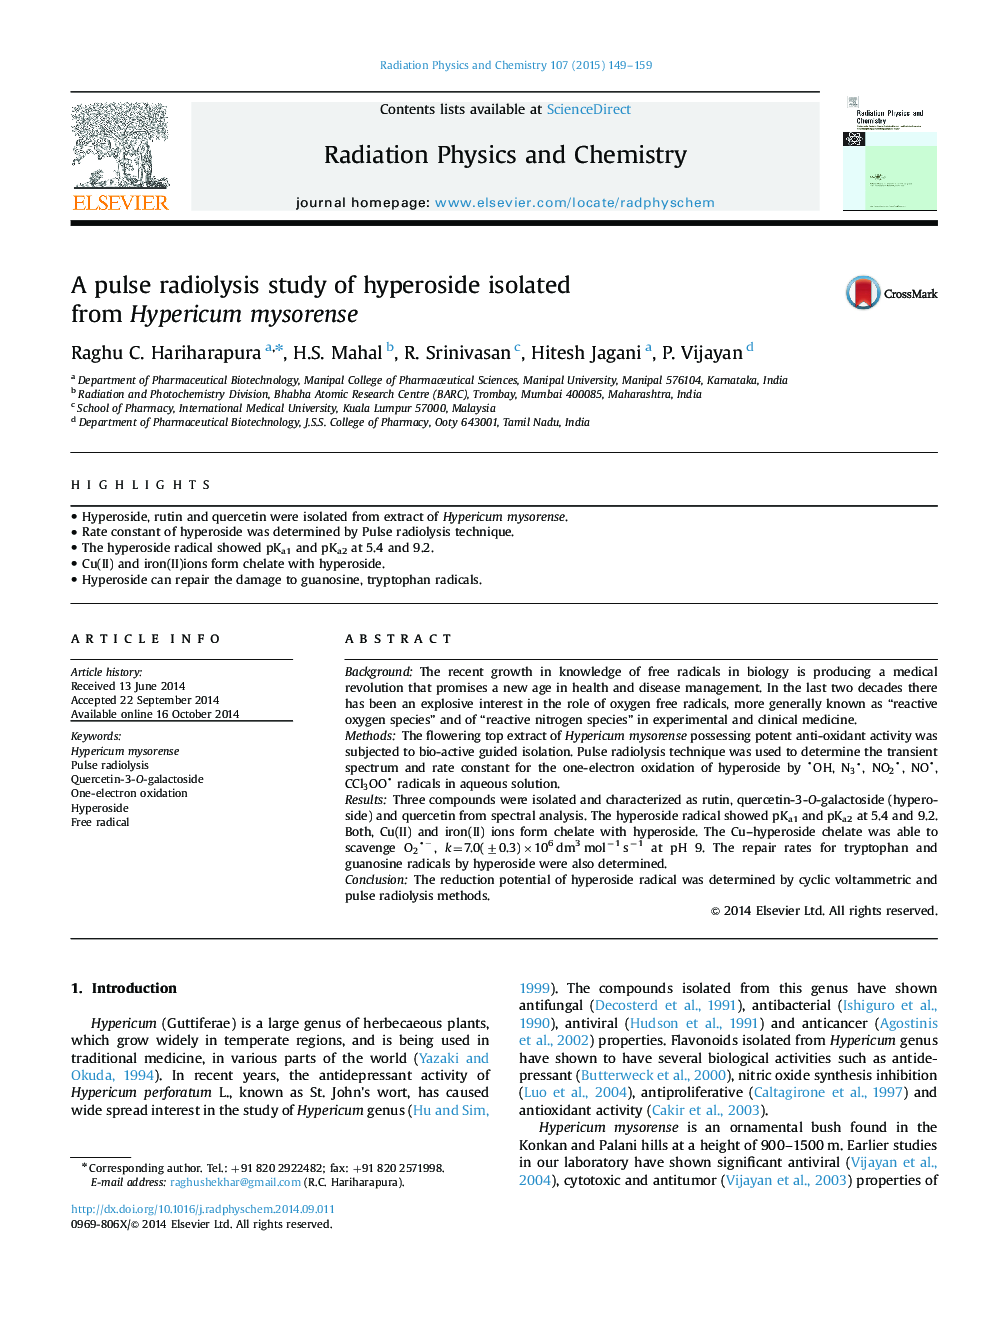 A pulse radiolysis study of hyperoside isolated from Hypericum mysorense